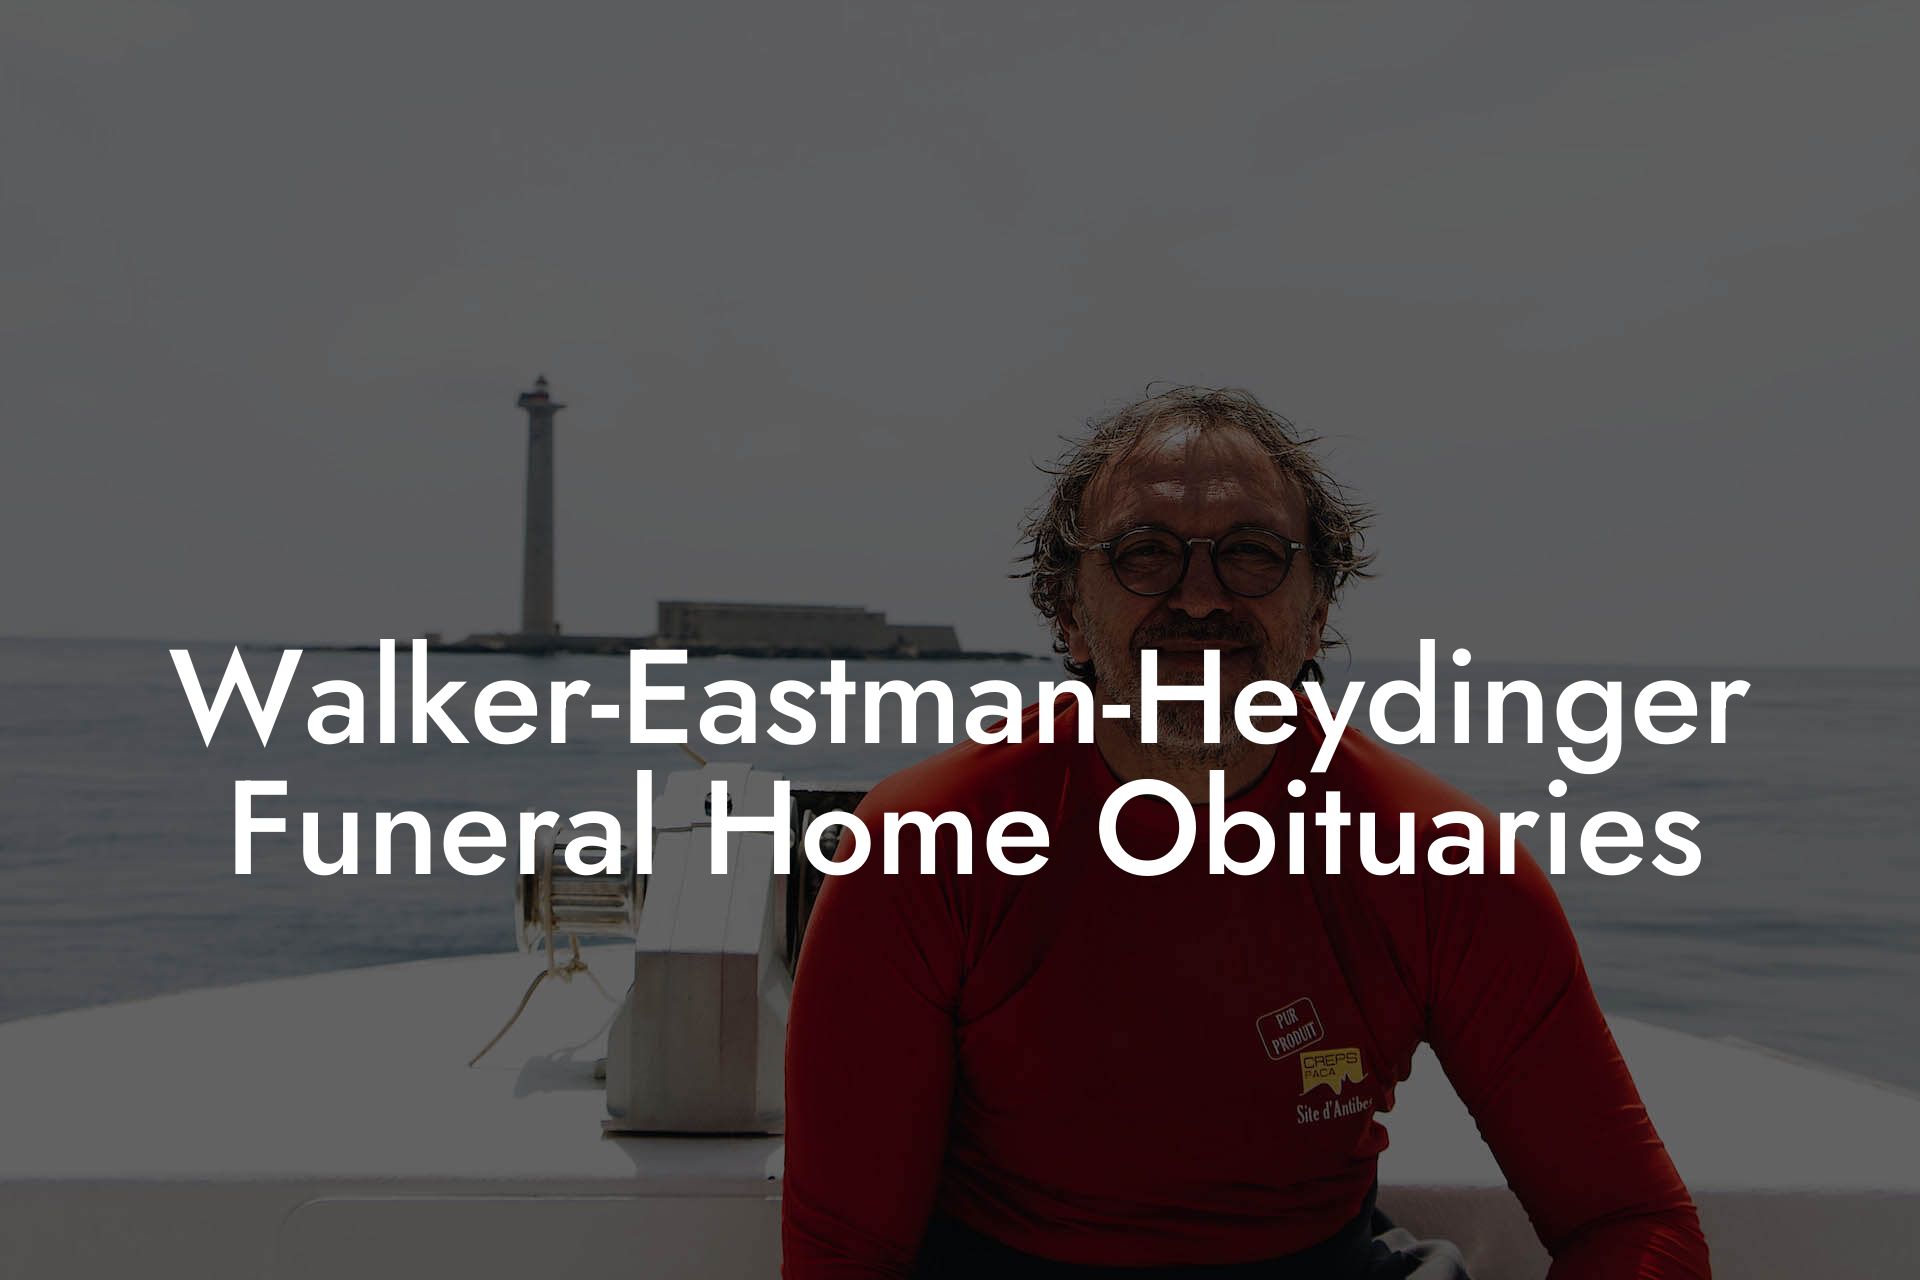 Walker-Eastman-Heydinger Funeral Home Obituaries